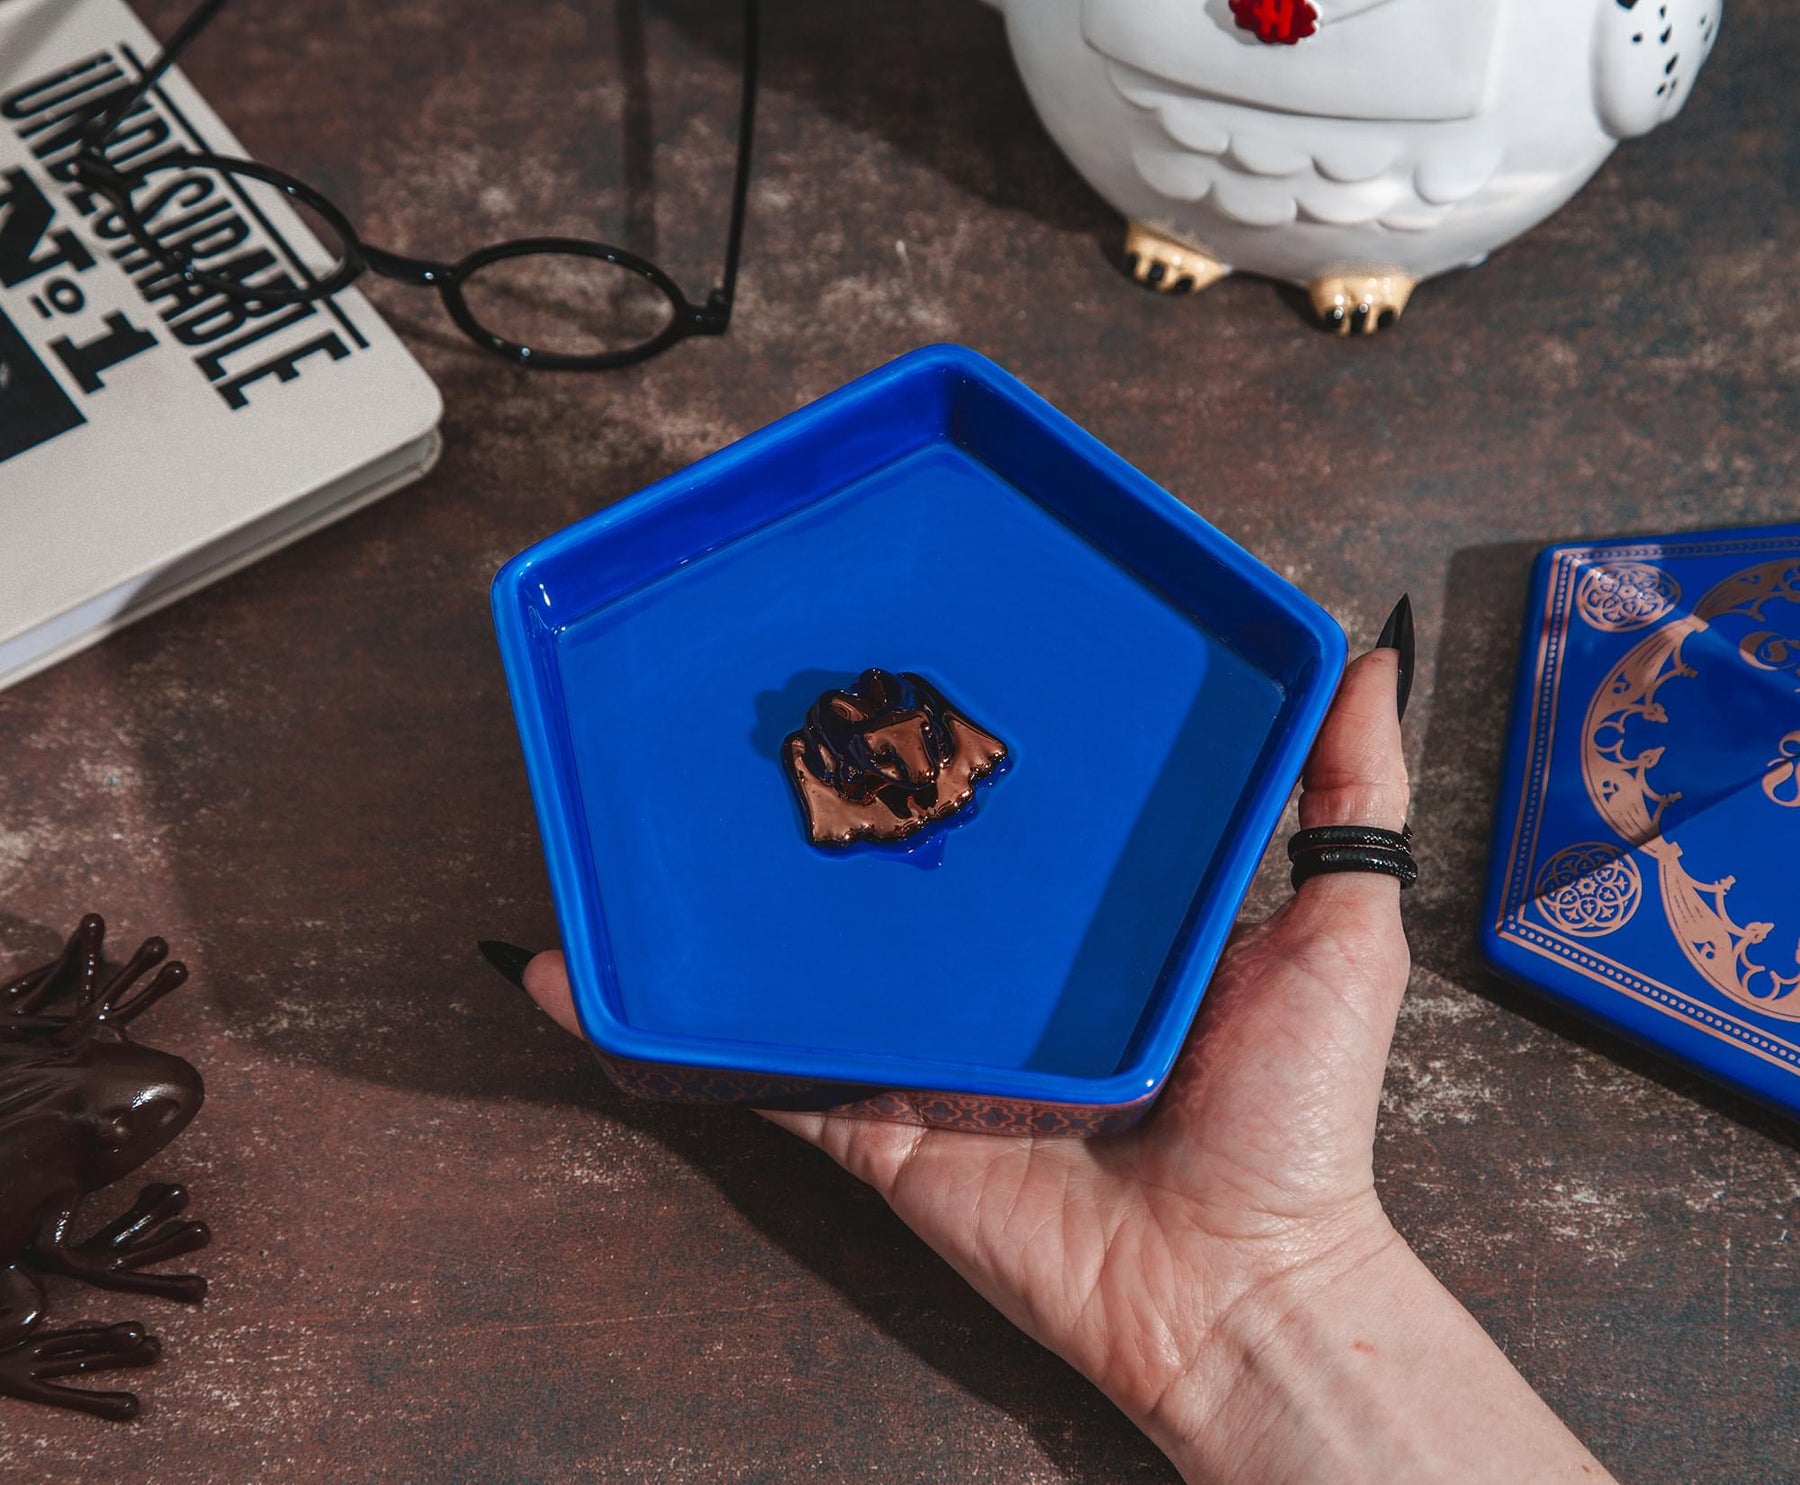 Harry Potter Chocolate Frog Ceramic Trinket Tray Dish